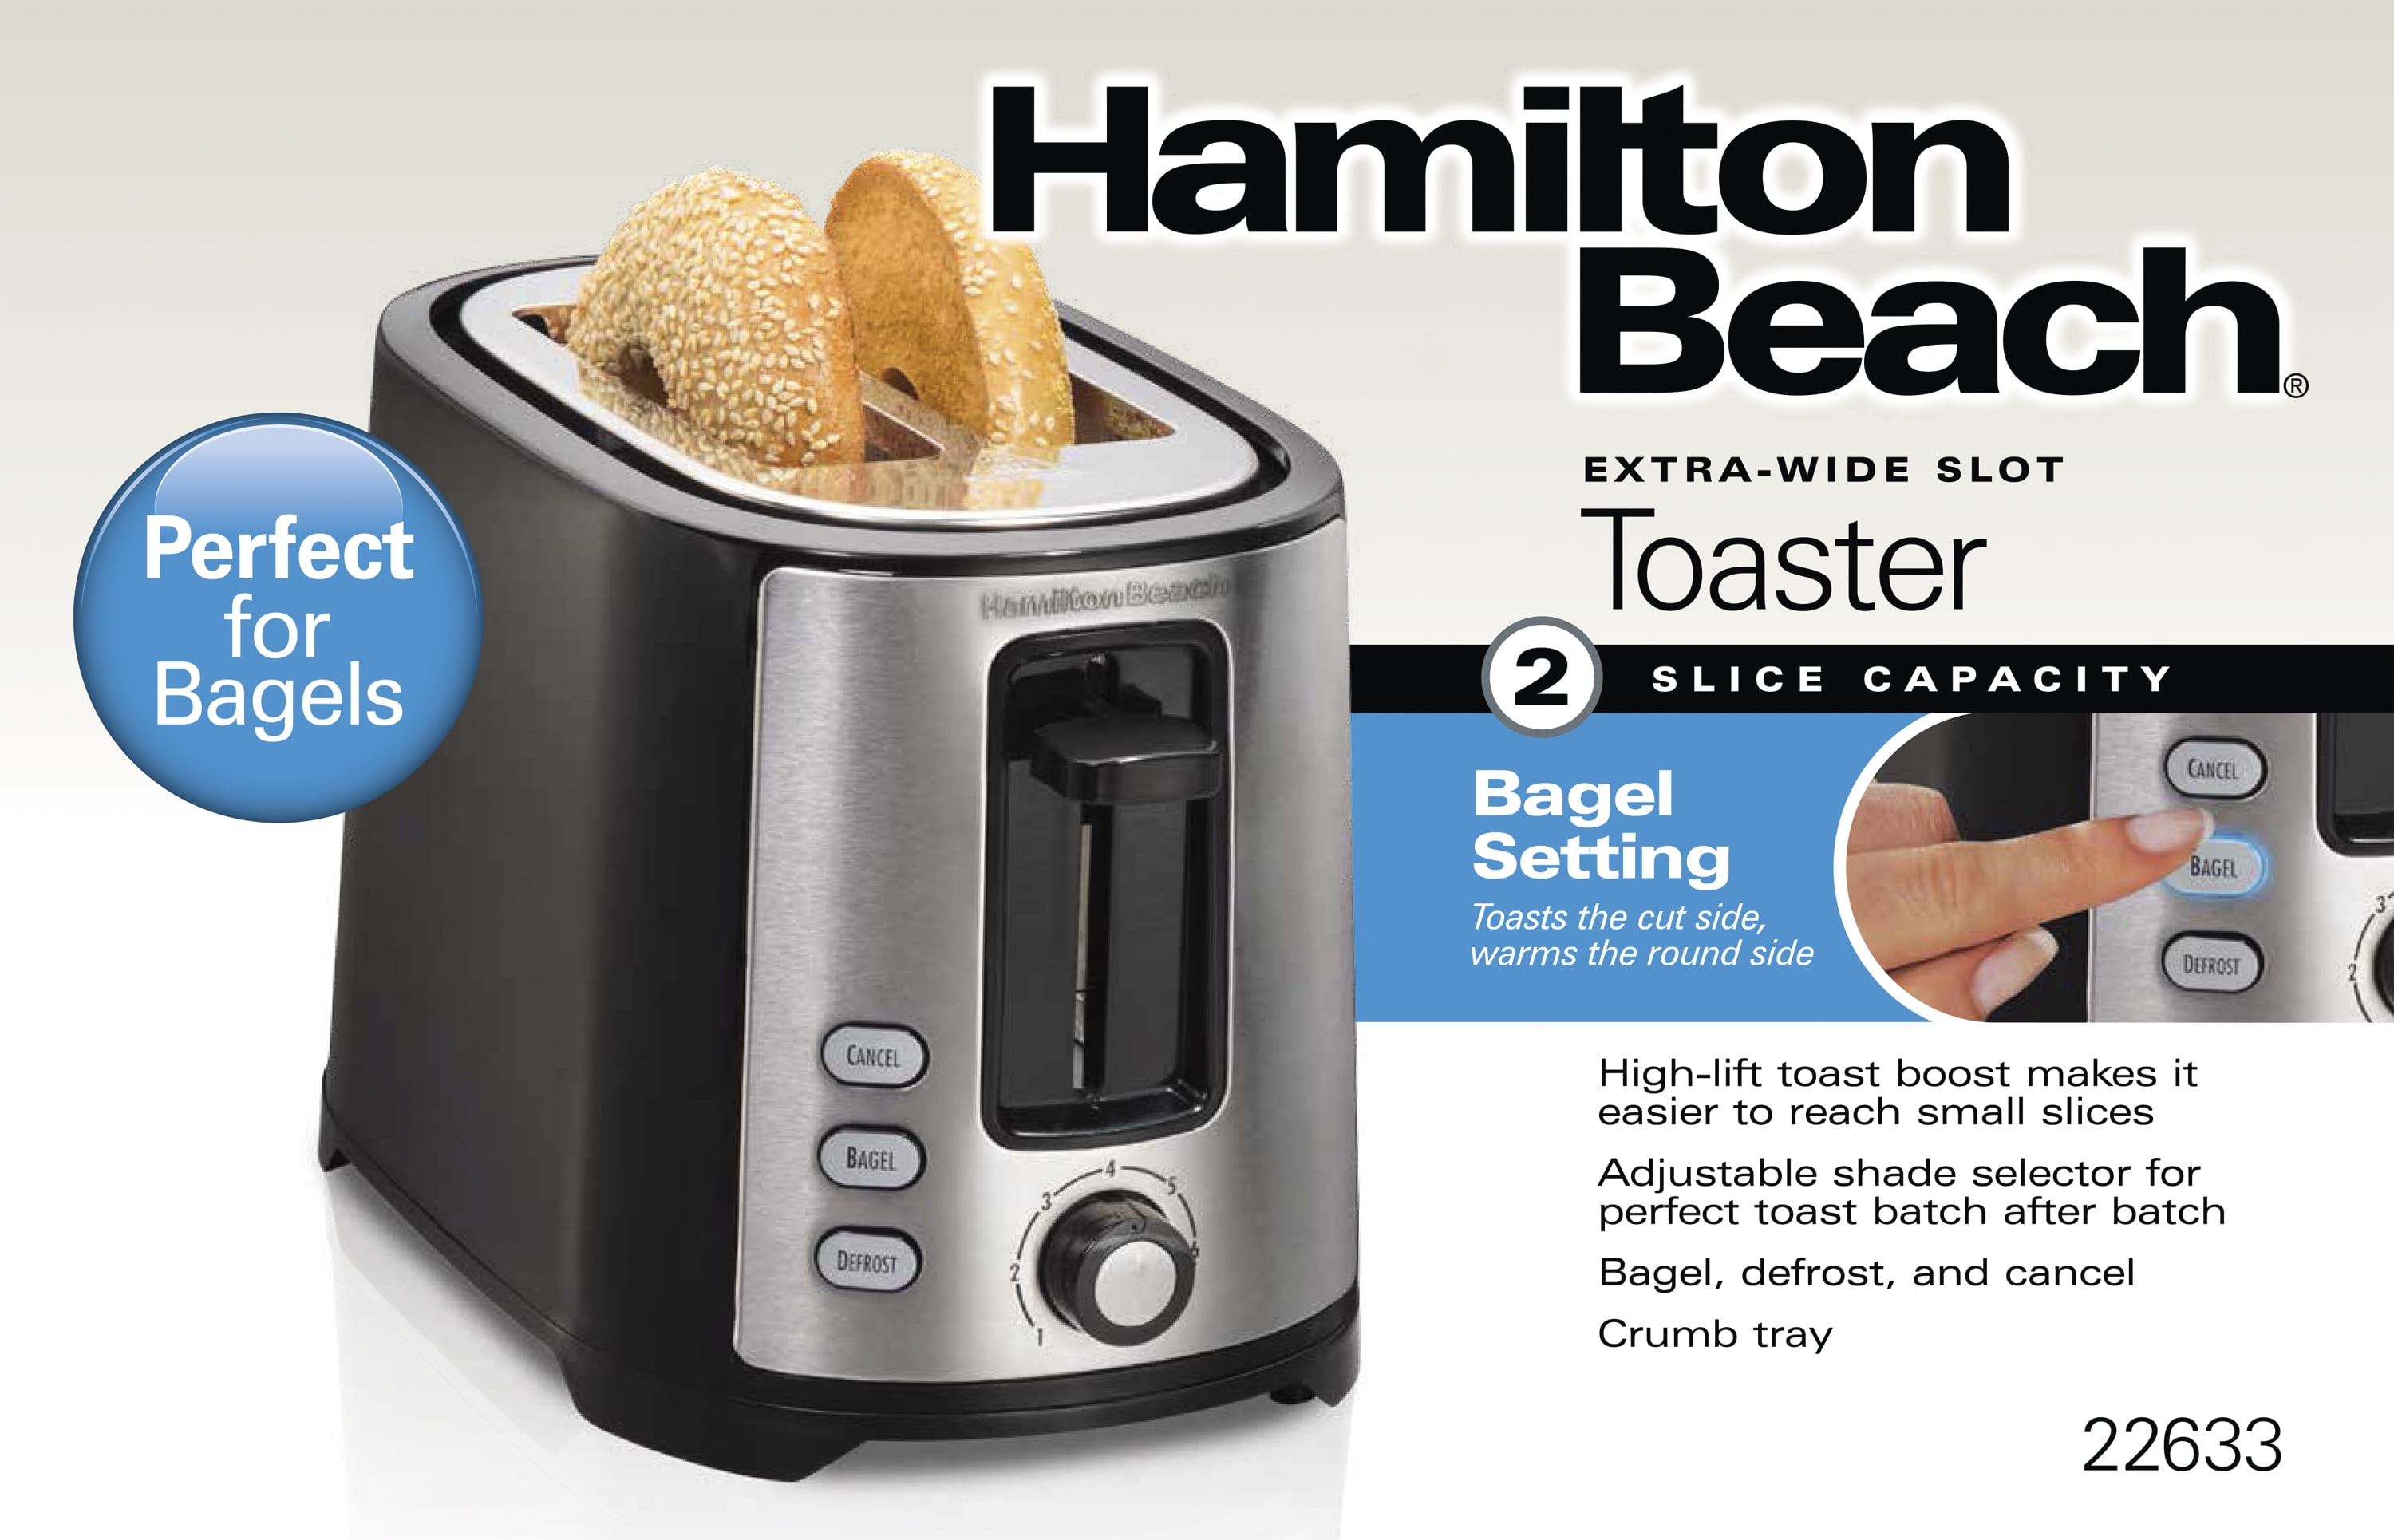 22633 Hamilton Beach Beach Extra-Wide 2 Slice Slot Toaster Black 